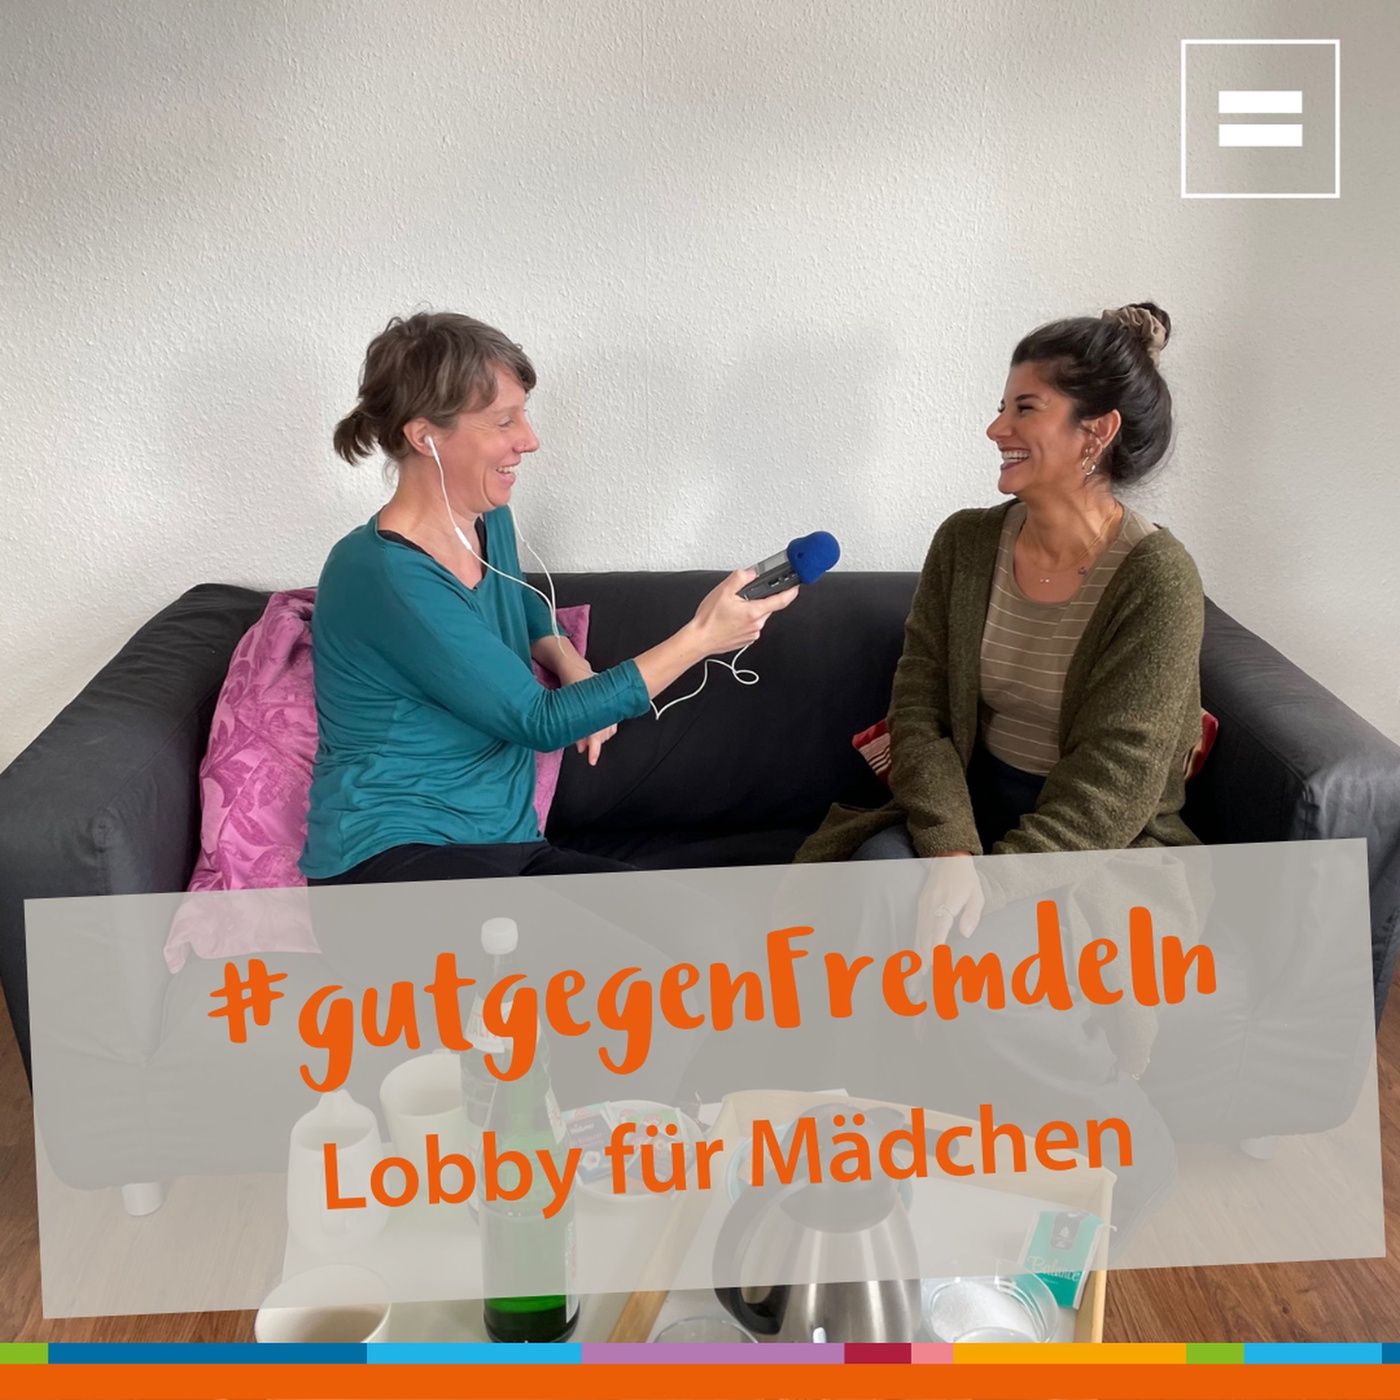 Folge 5 - Lobby für Mädchen e.V. in Köln - Gut gegen Fremdeln (PJW NRW)